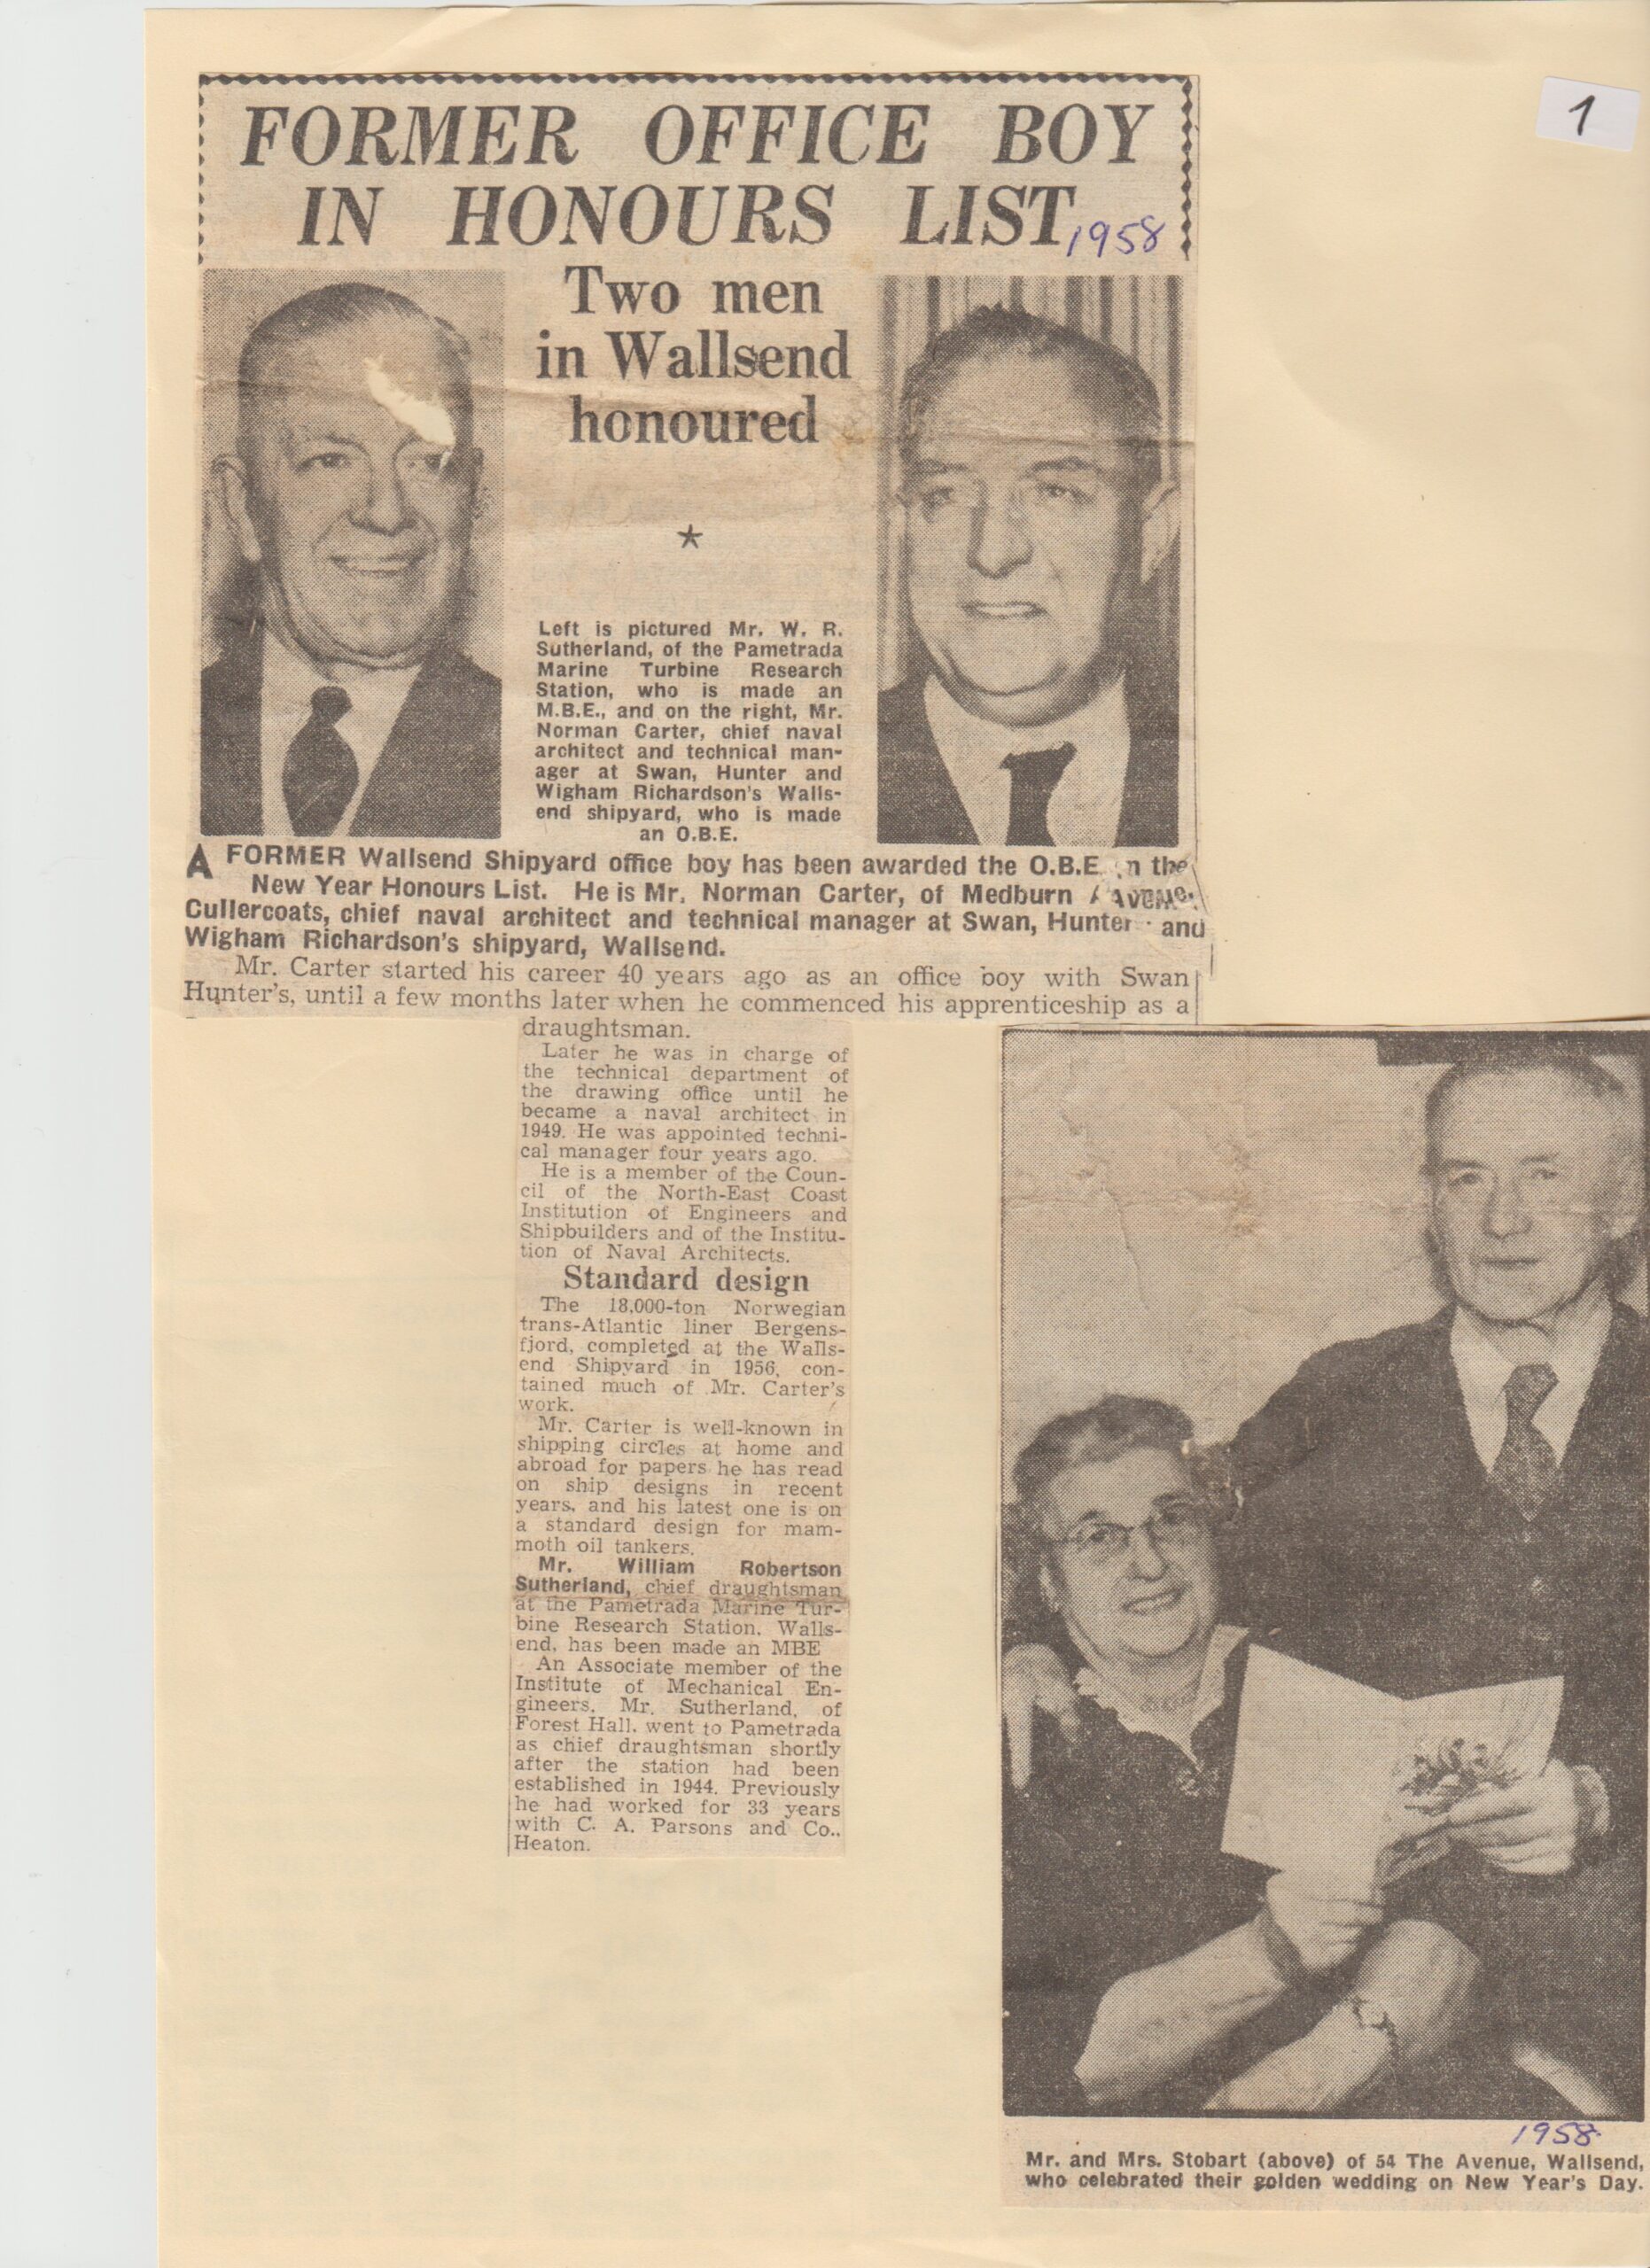 1958 OBE Willian Robertson Sutherland _ Norman Carter _ Mr _ Mrs Sobart Golden Wedding Anniversary